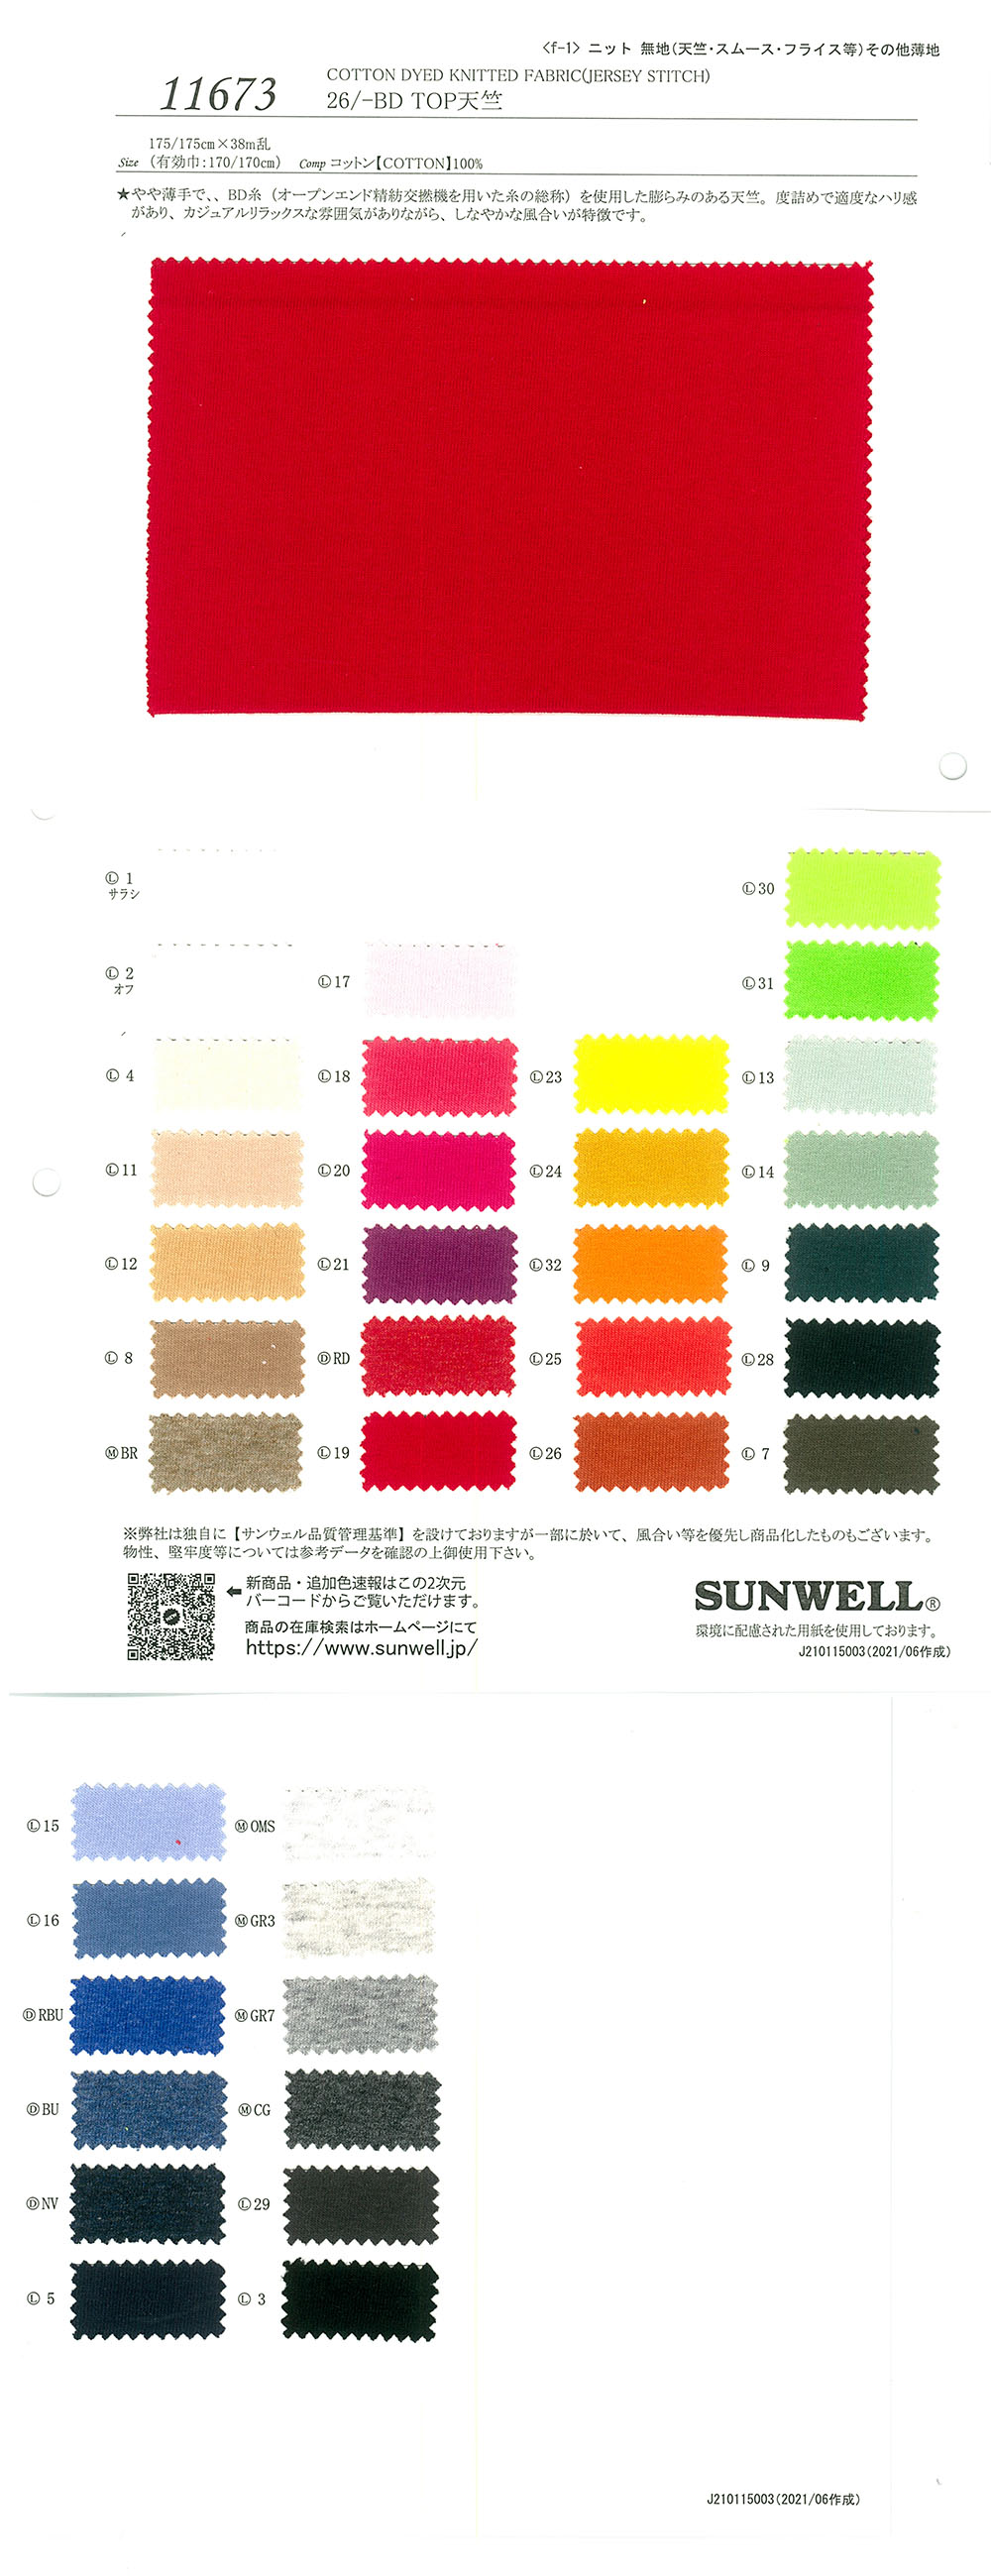 11673 26/-BD TOP Baumwolle Tianzhu-Baumwolle[Textilgewebe] SUNWELL